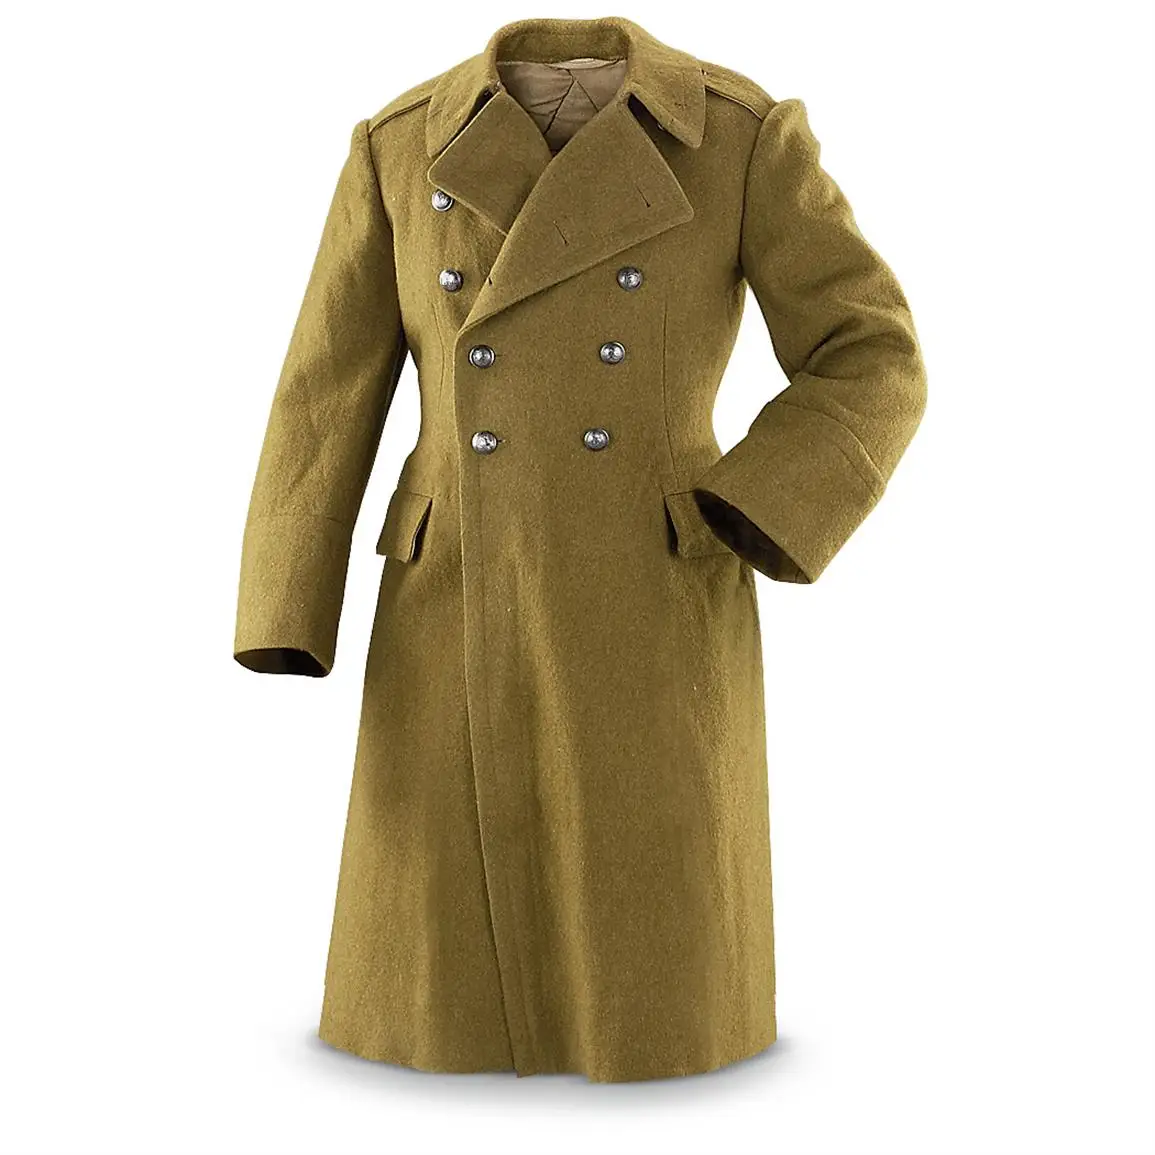 Military Trench Coat ww1 era